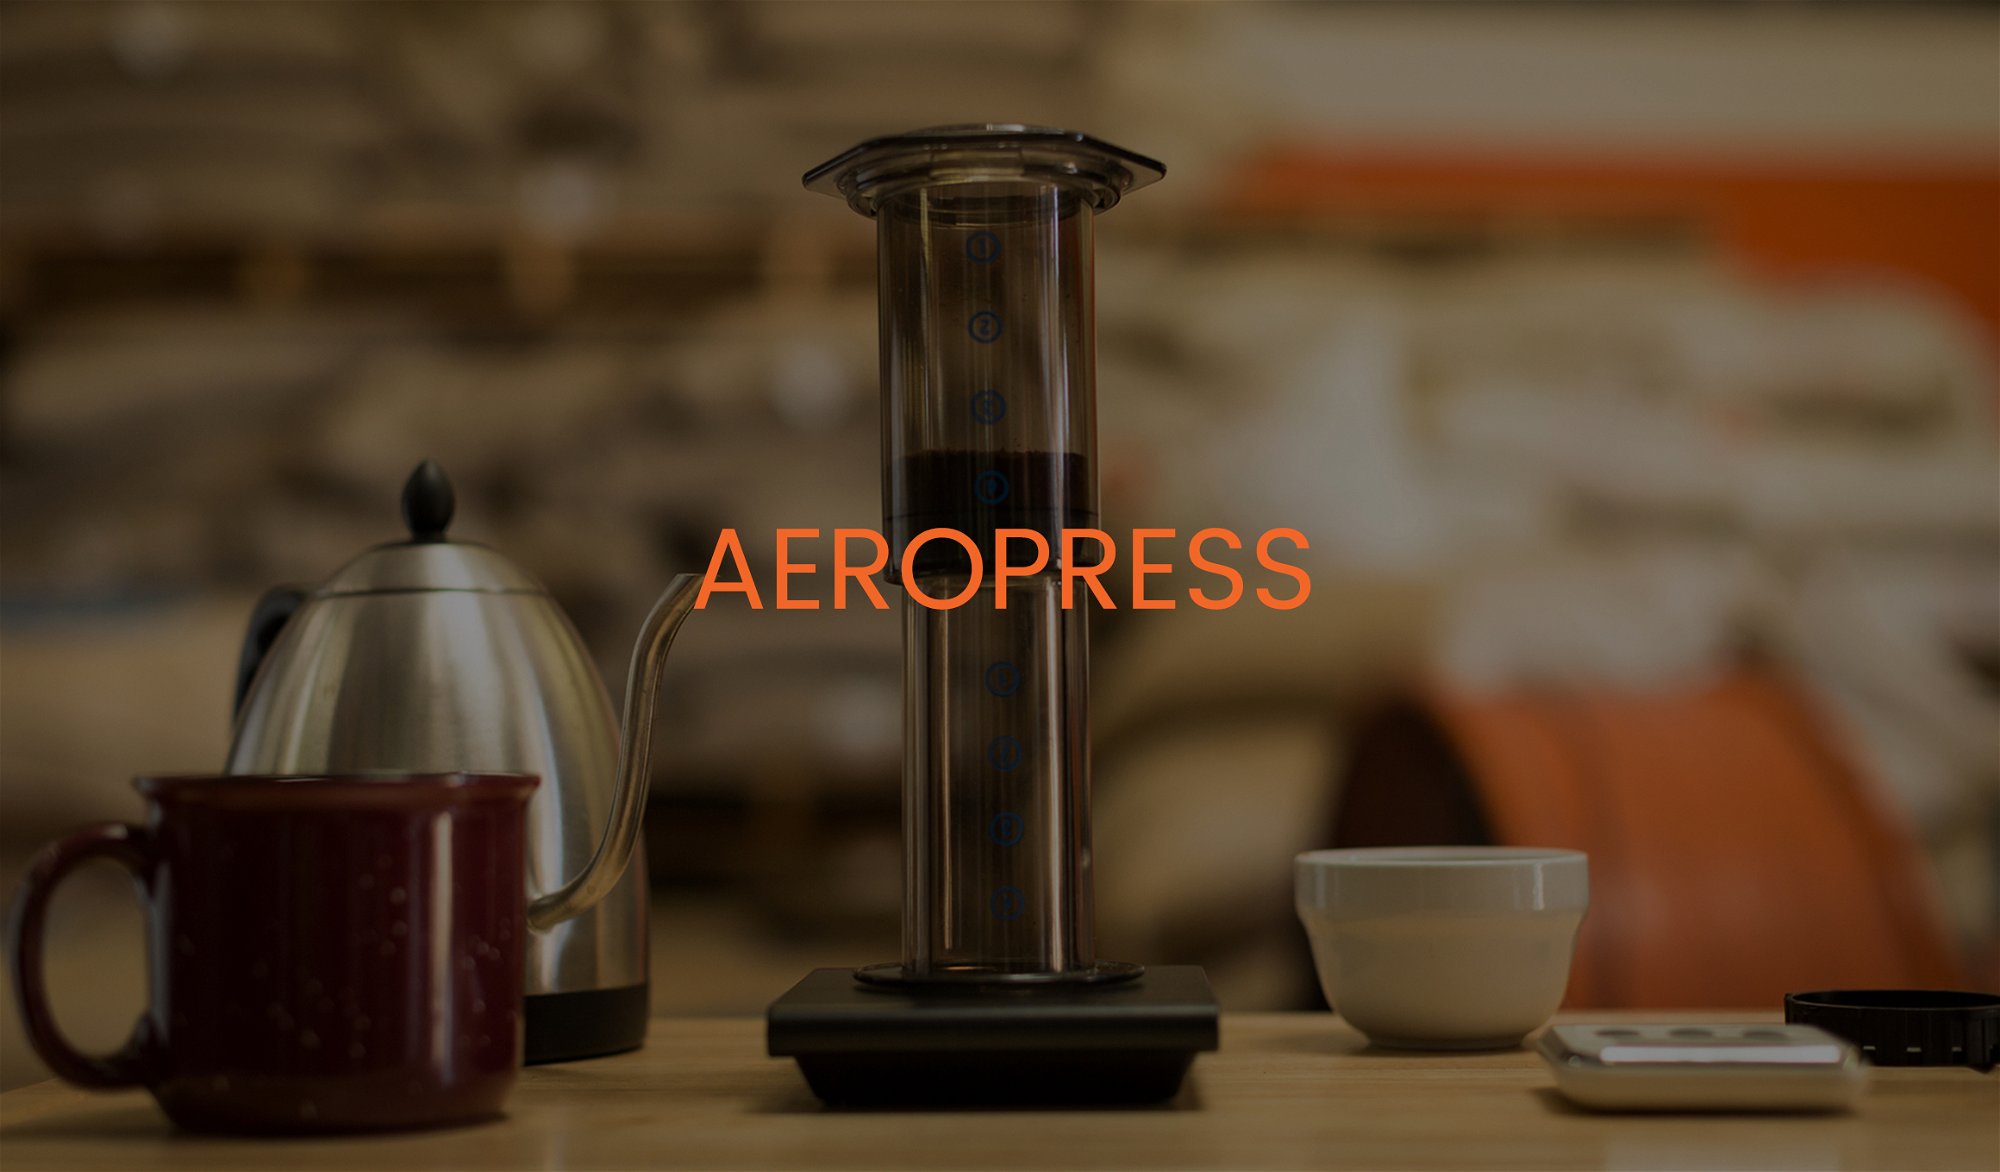 Aeropress on scale with mug and kettle. Titled "Aeropress"